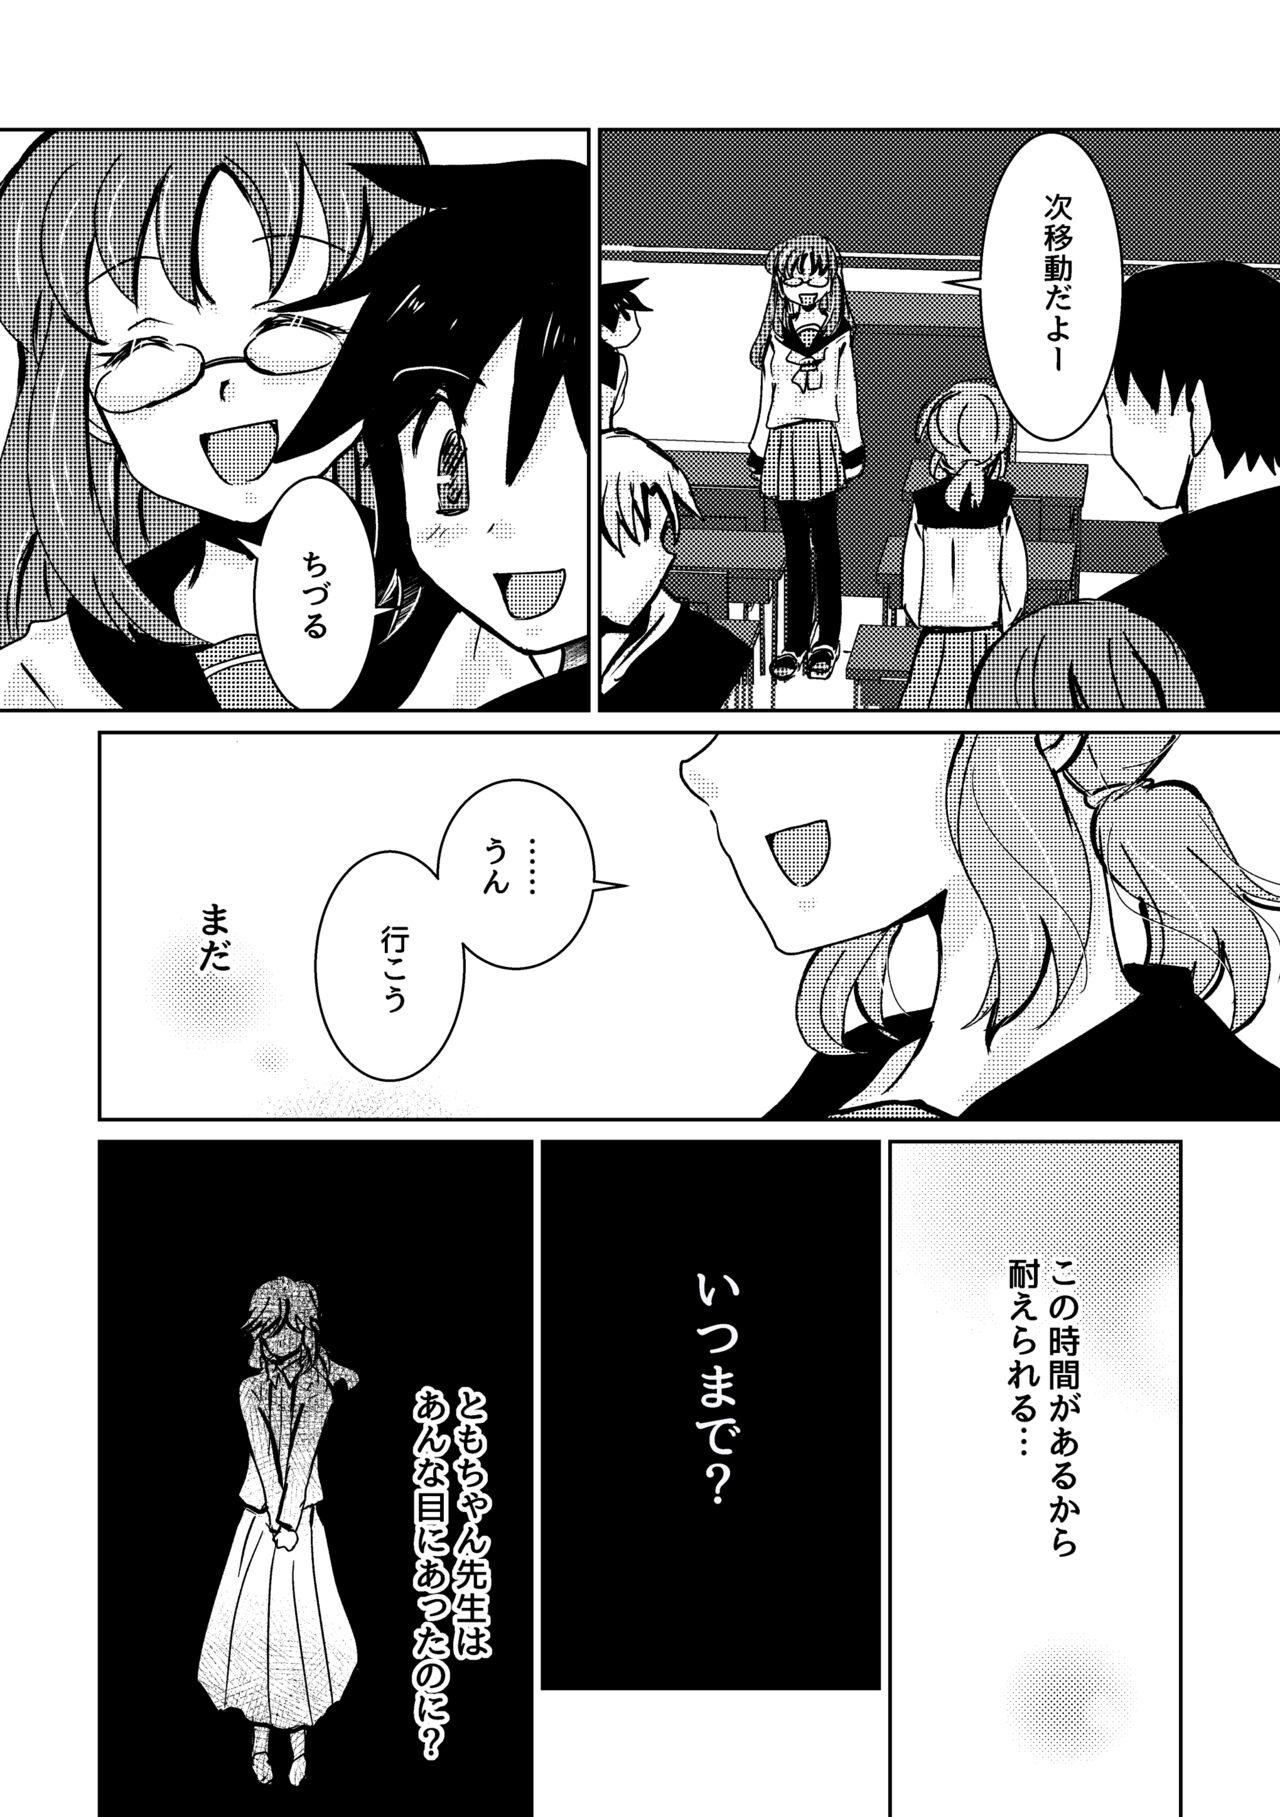 Brother Kareya Yoru no Hanaka Episode 3 Cameltoe - Page 8